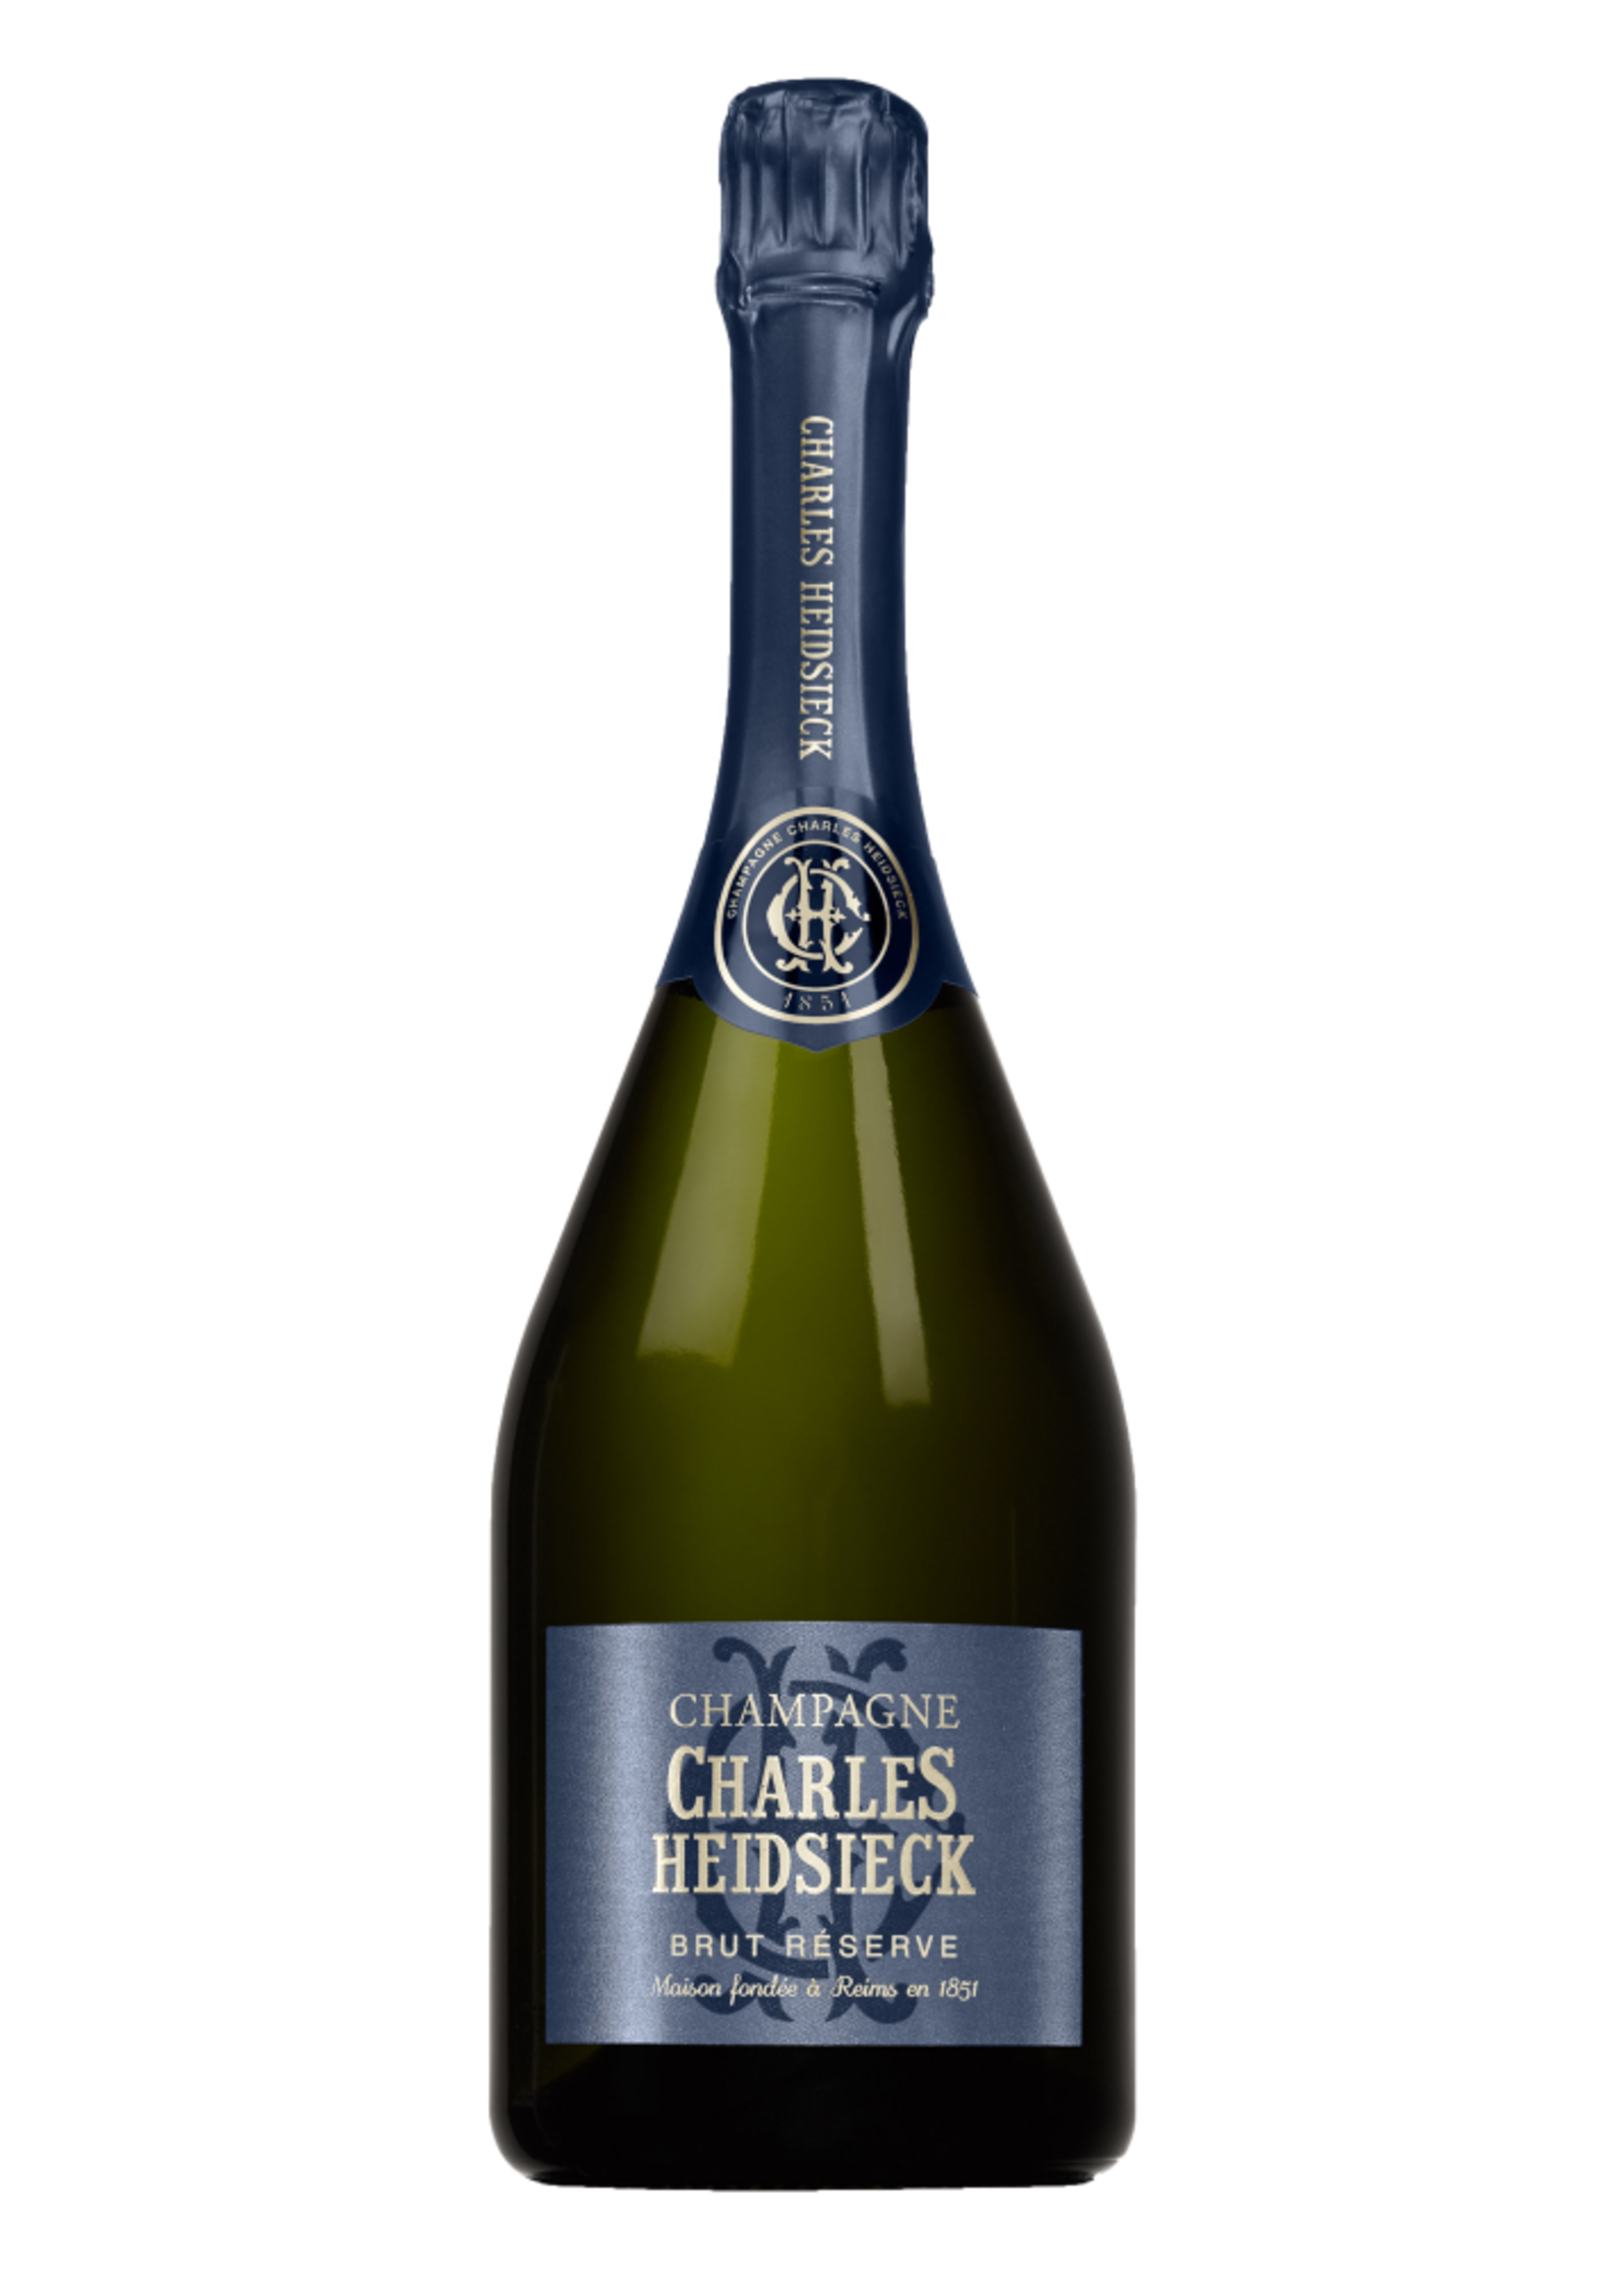 Charles Heidsieck Charles Heidsieck Brut Reserve NV Champagne